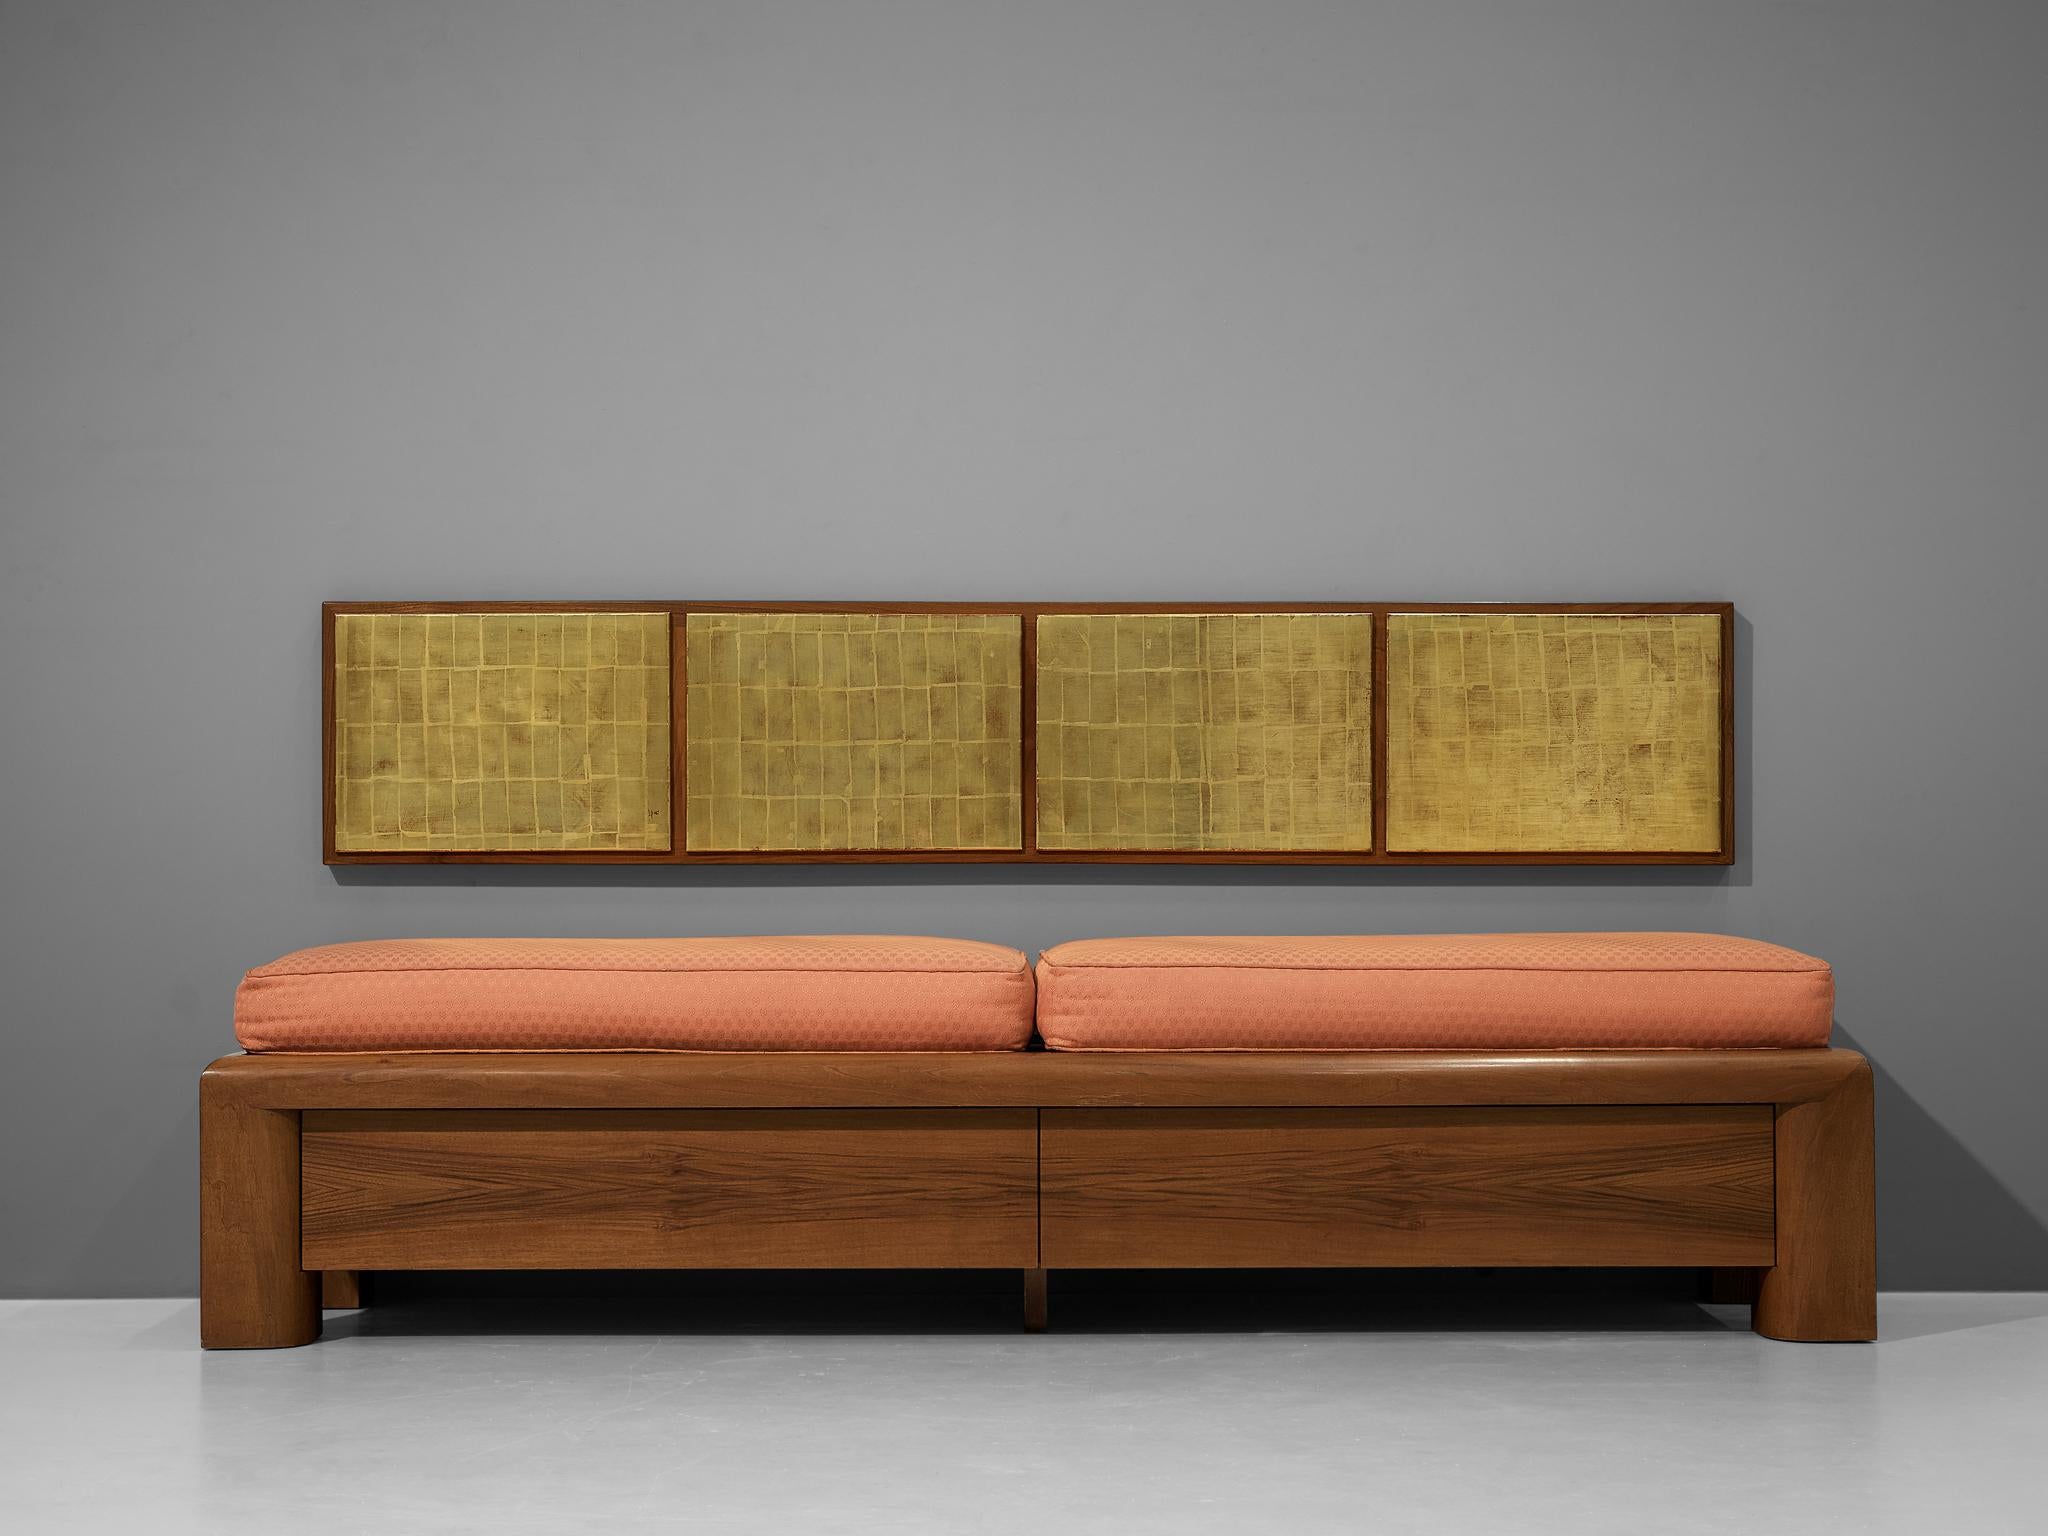 Late 20th Century Cristiano Toraldo di Francia Unique Bench in Walnut with Gold Leaf Wall Panel For Sale